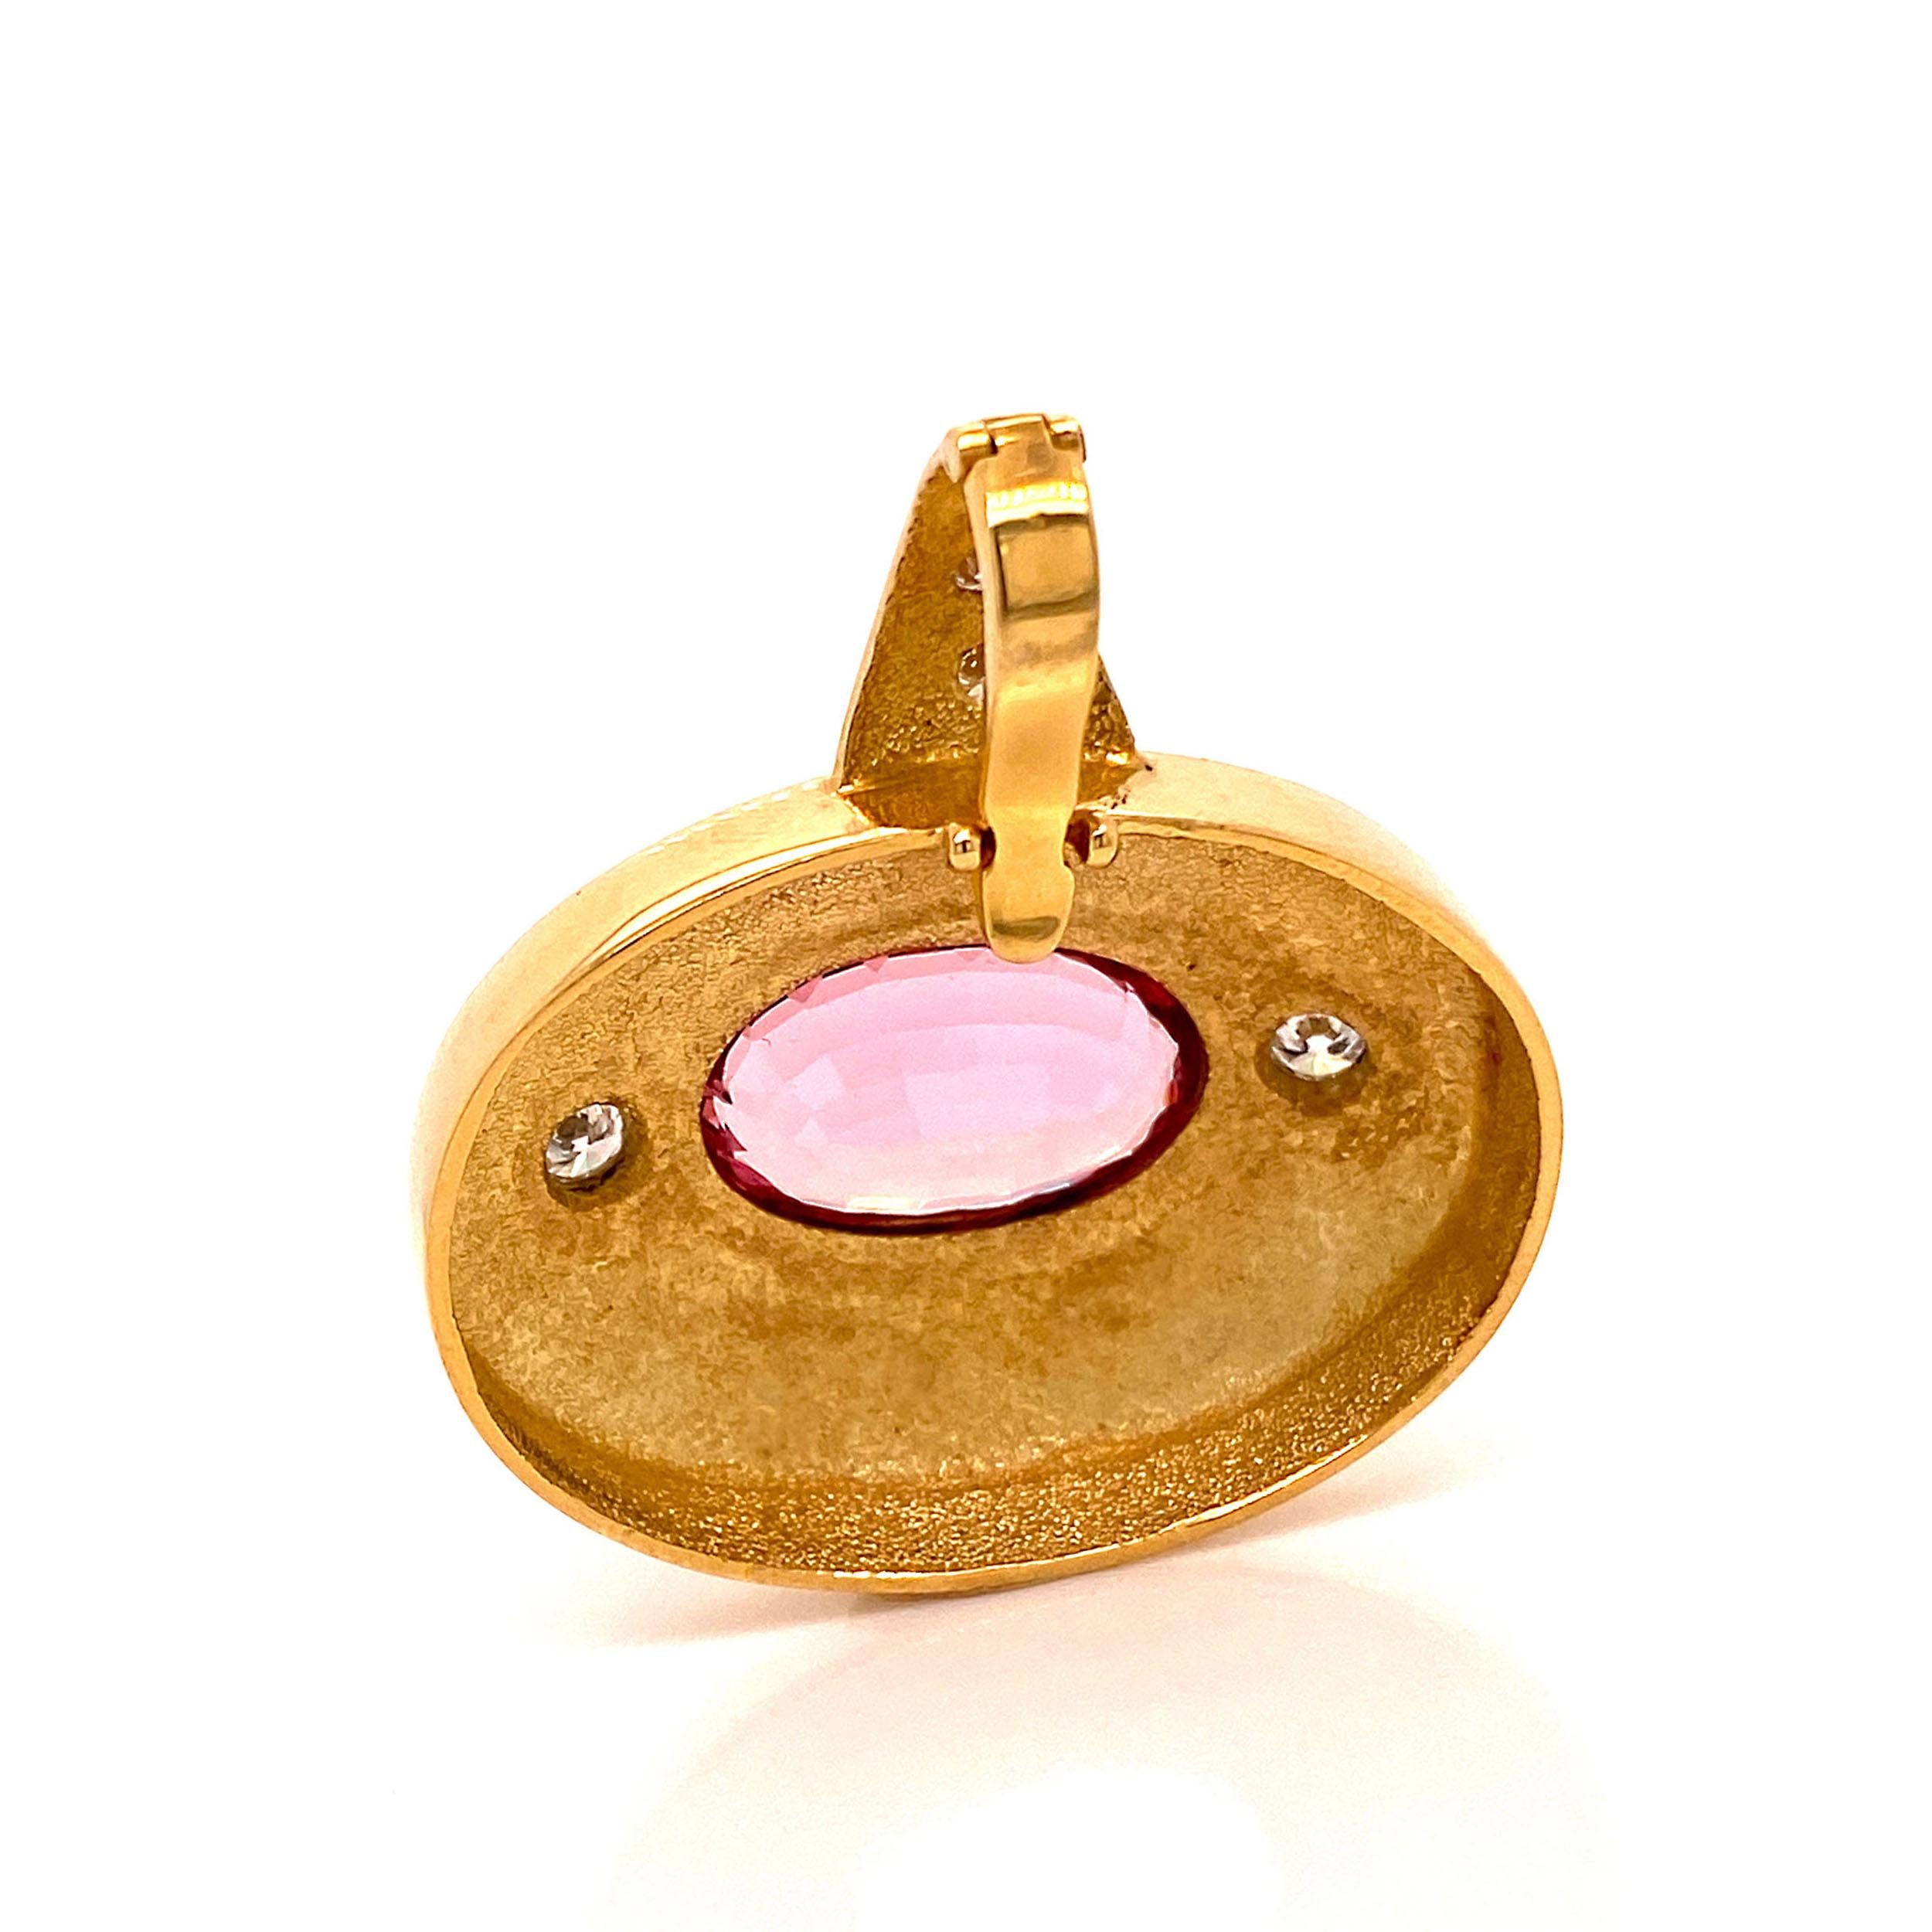 Artisan AJD 18K Gold Pendant with Pink Tourmaline and Diamonds